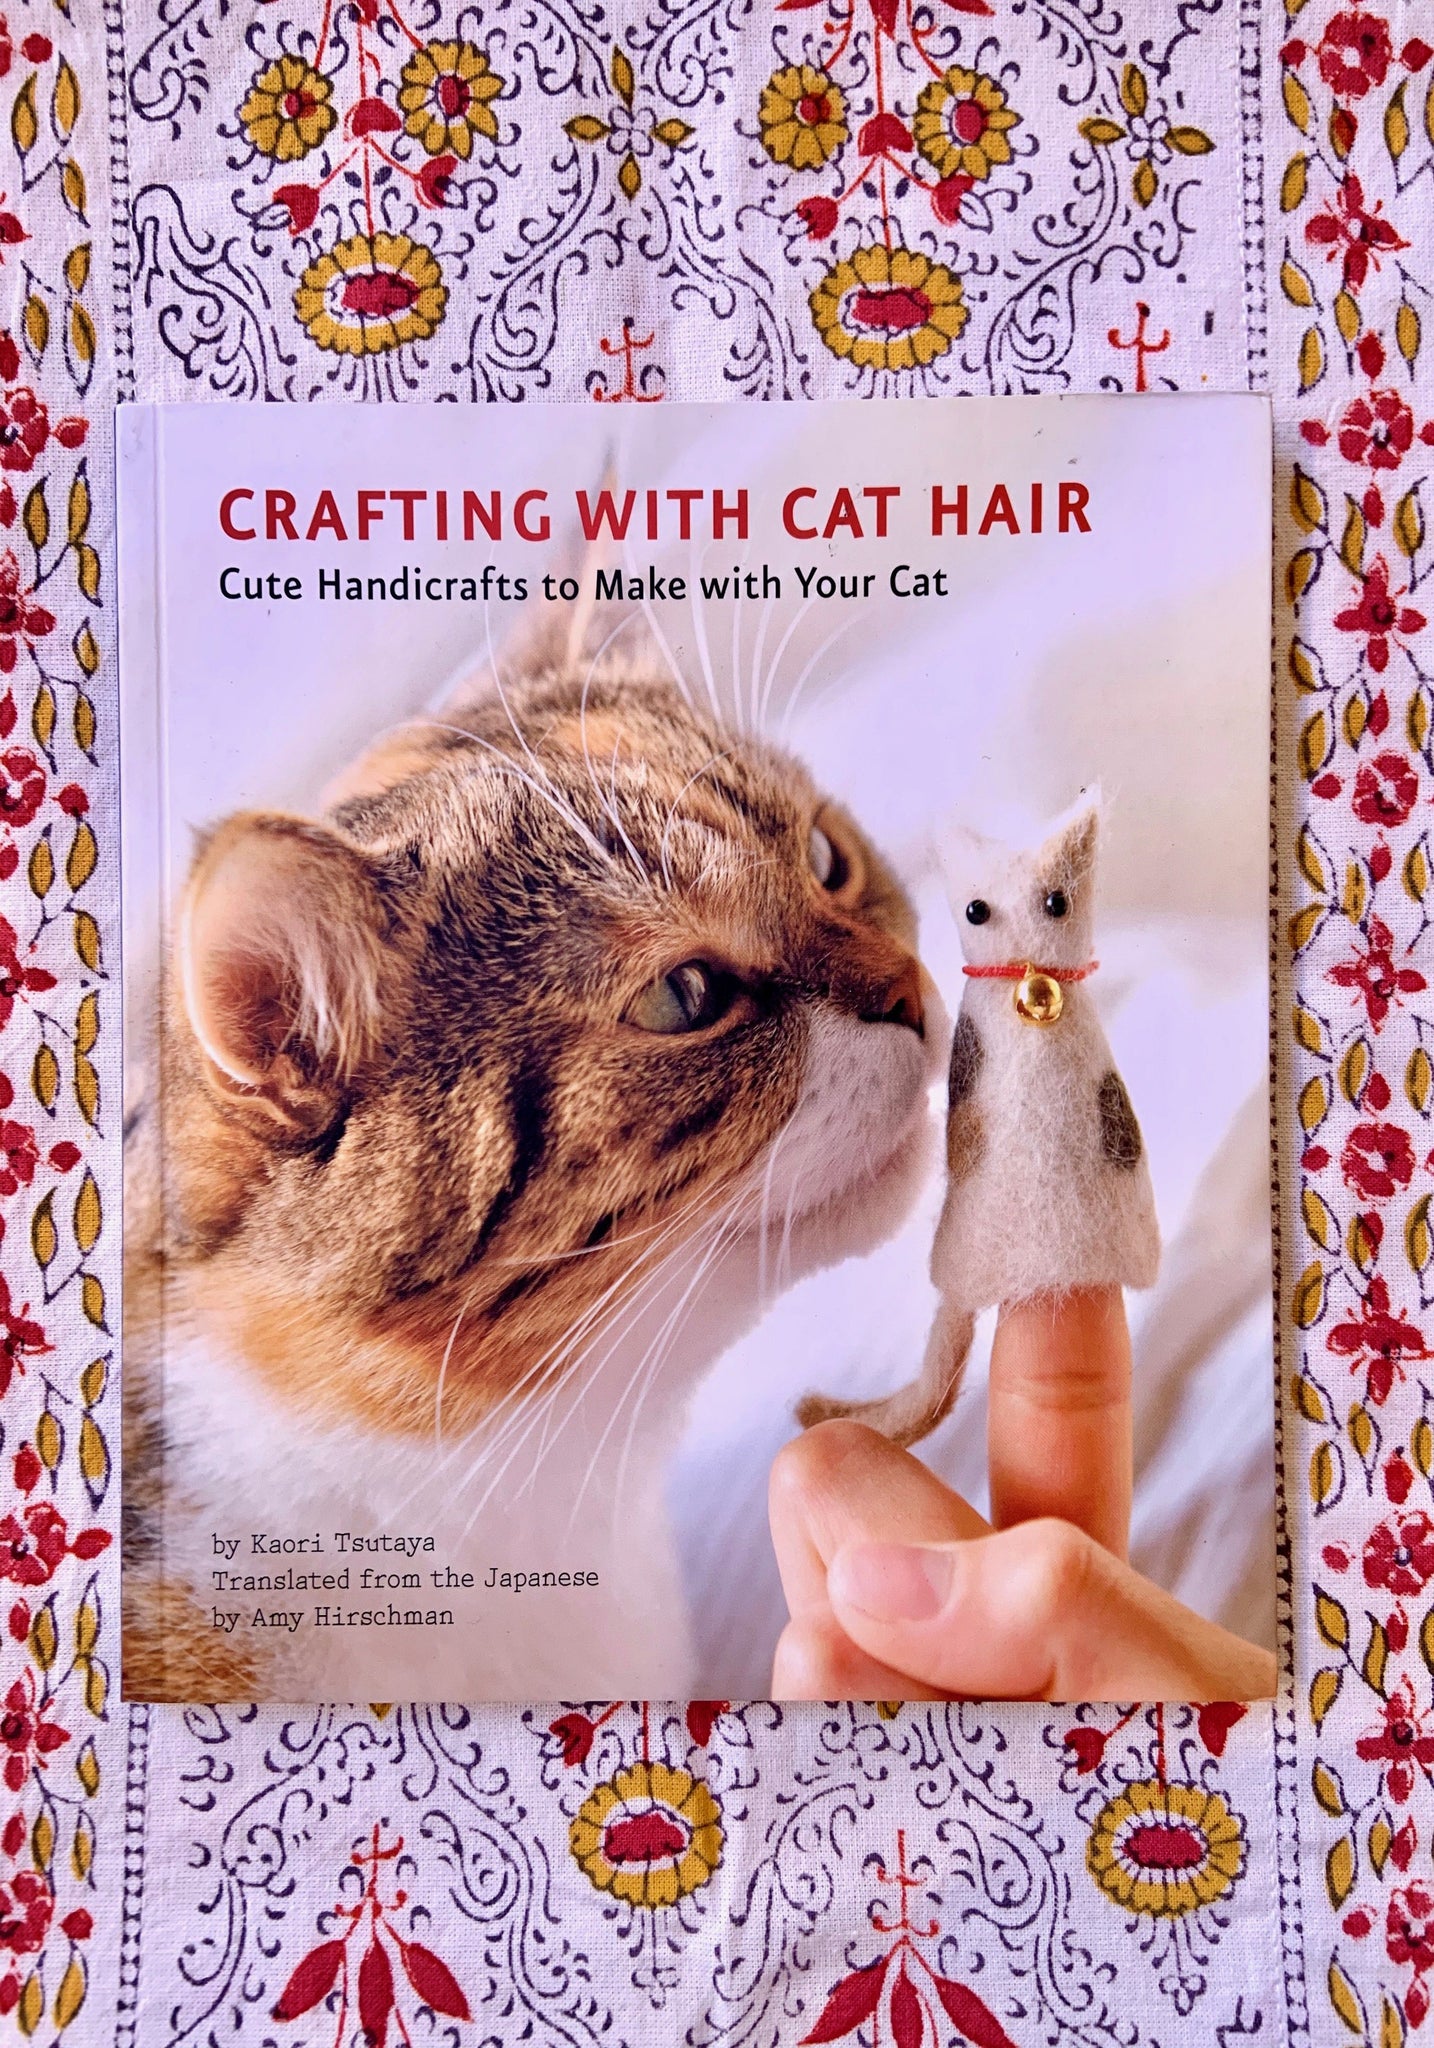 Cat hair crafts?! (OC) : r/ThriftStoreHauls